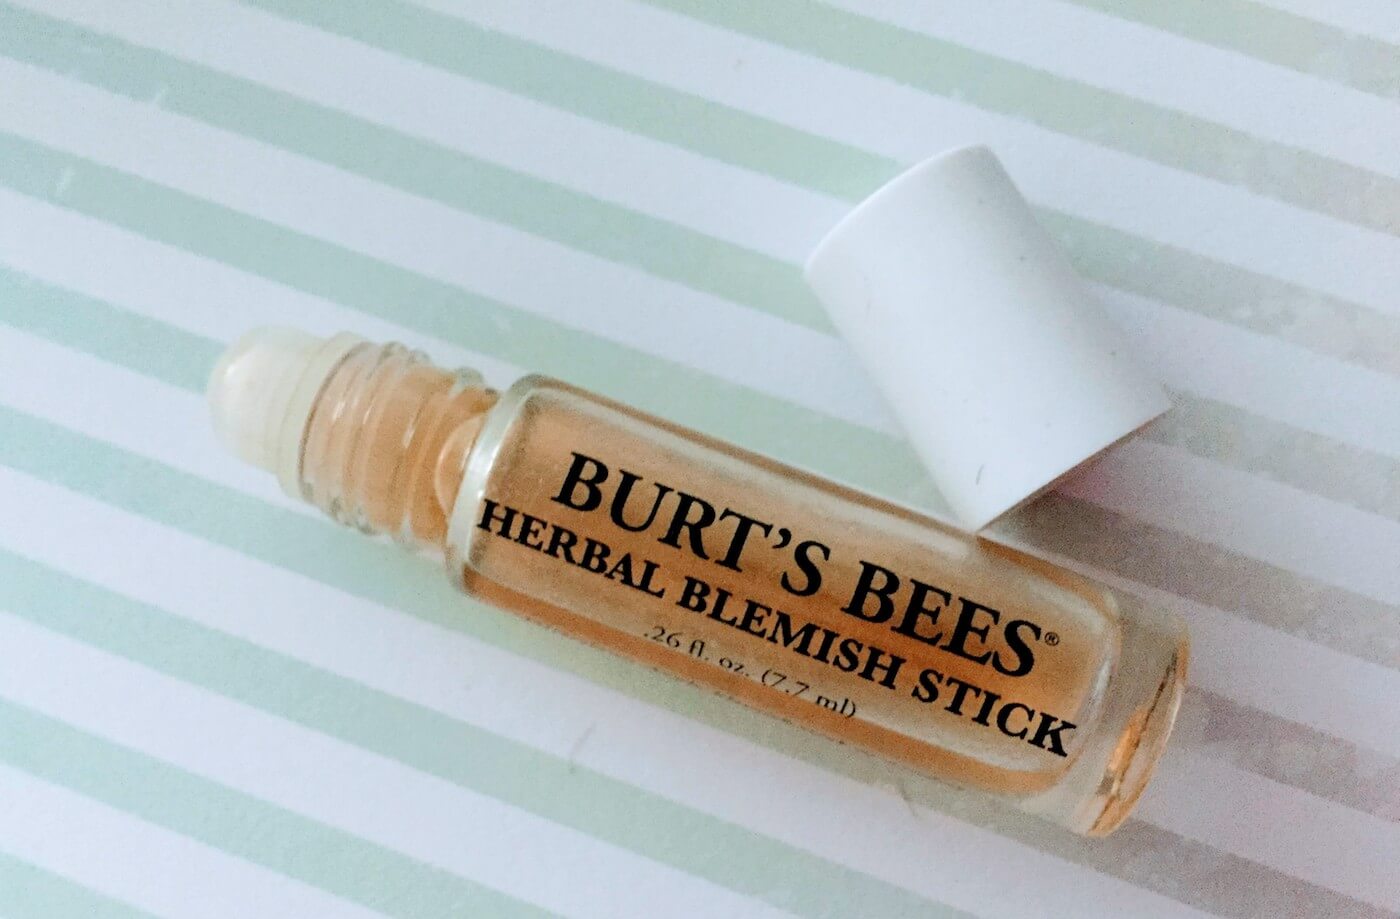 Burt's Bees Blemish Stick Review